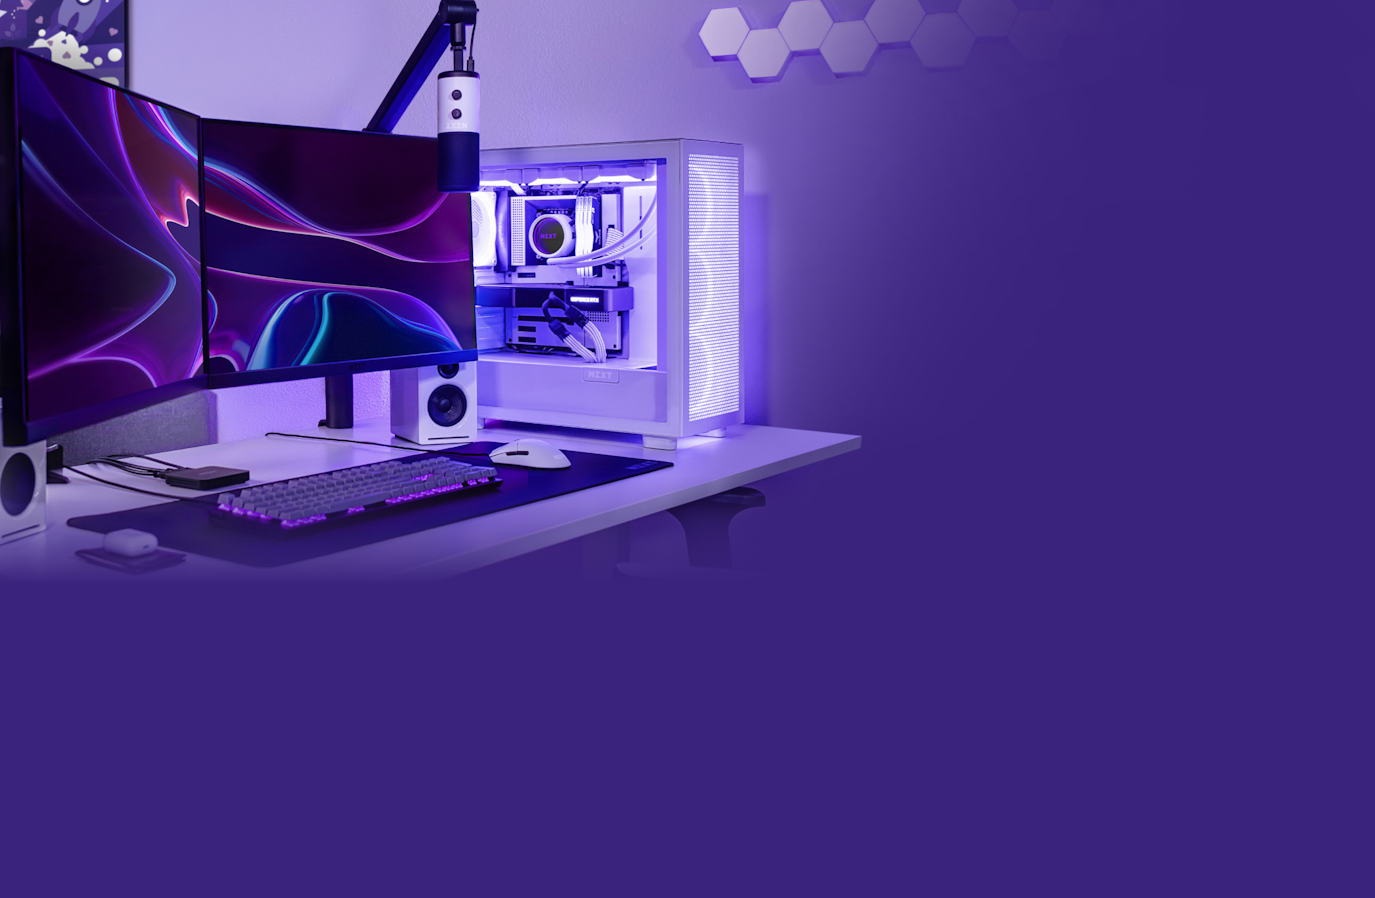 NZXT PC Desk Setup with Purple RGB Lighting